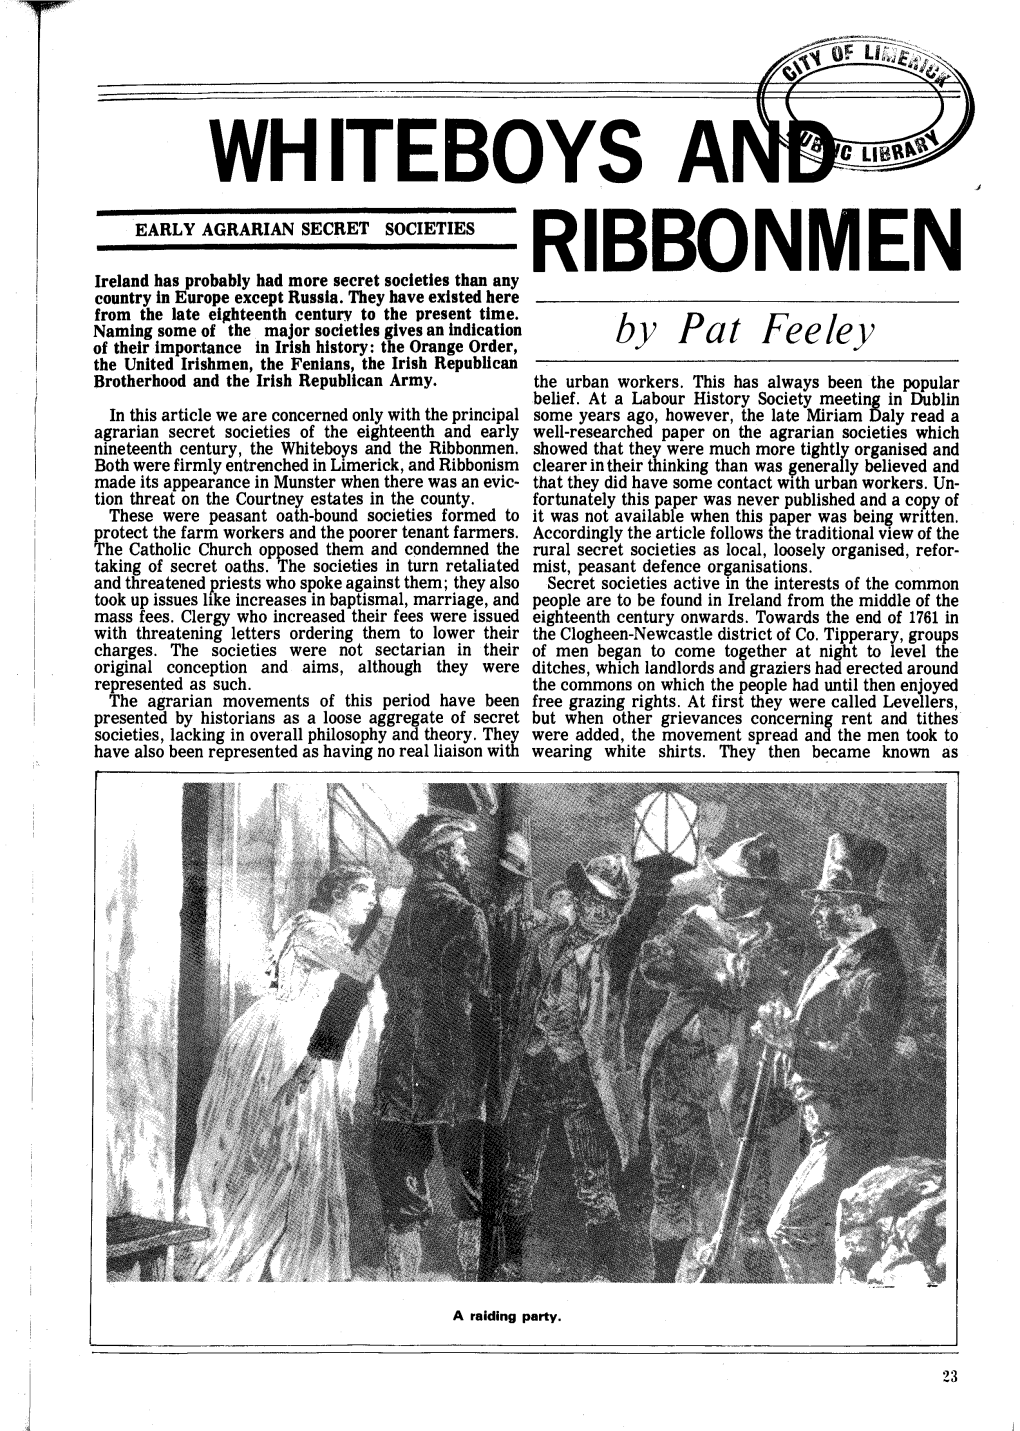 Whiteboys and Ribbonmen